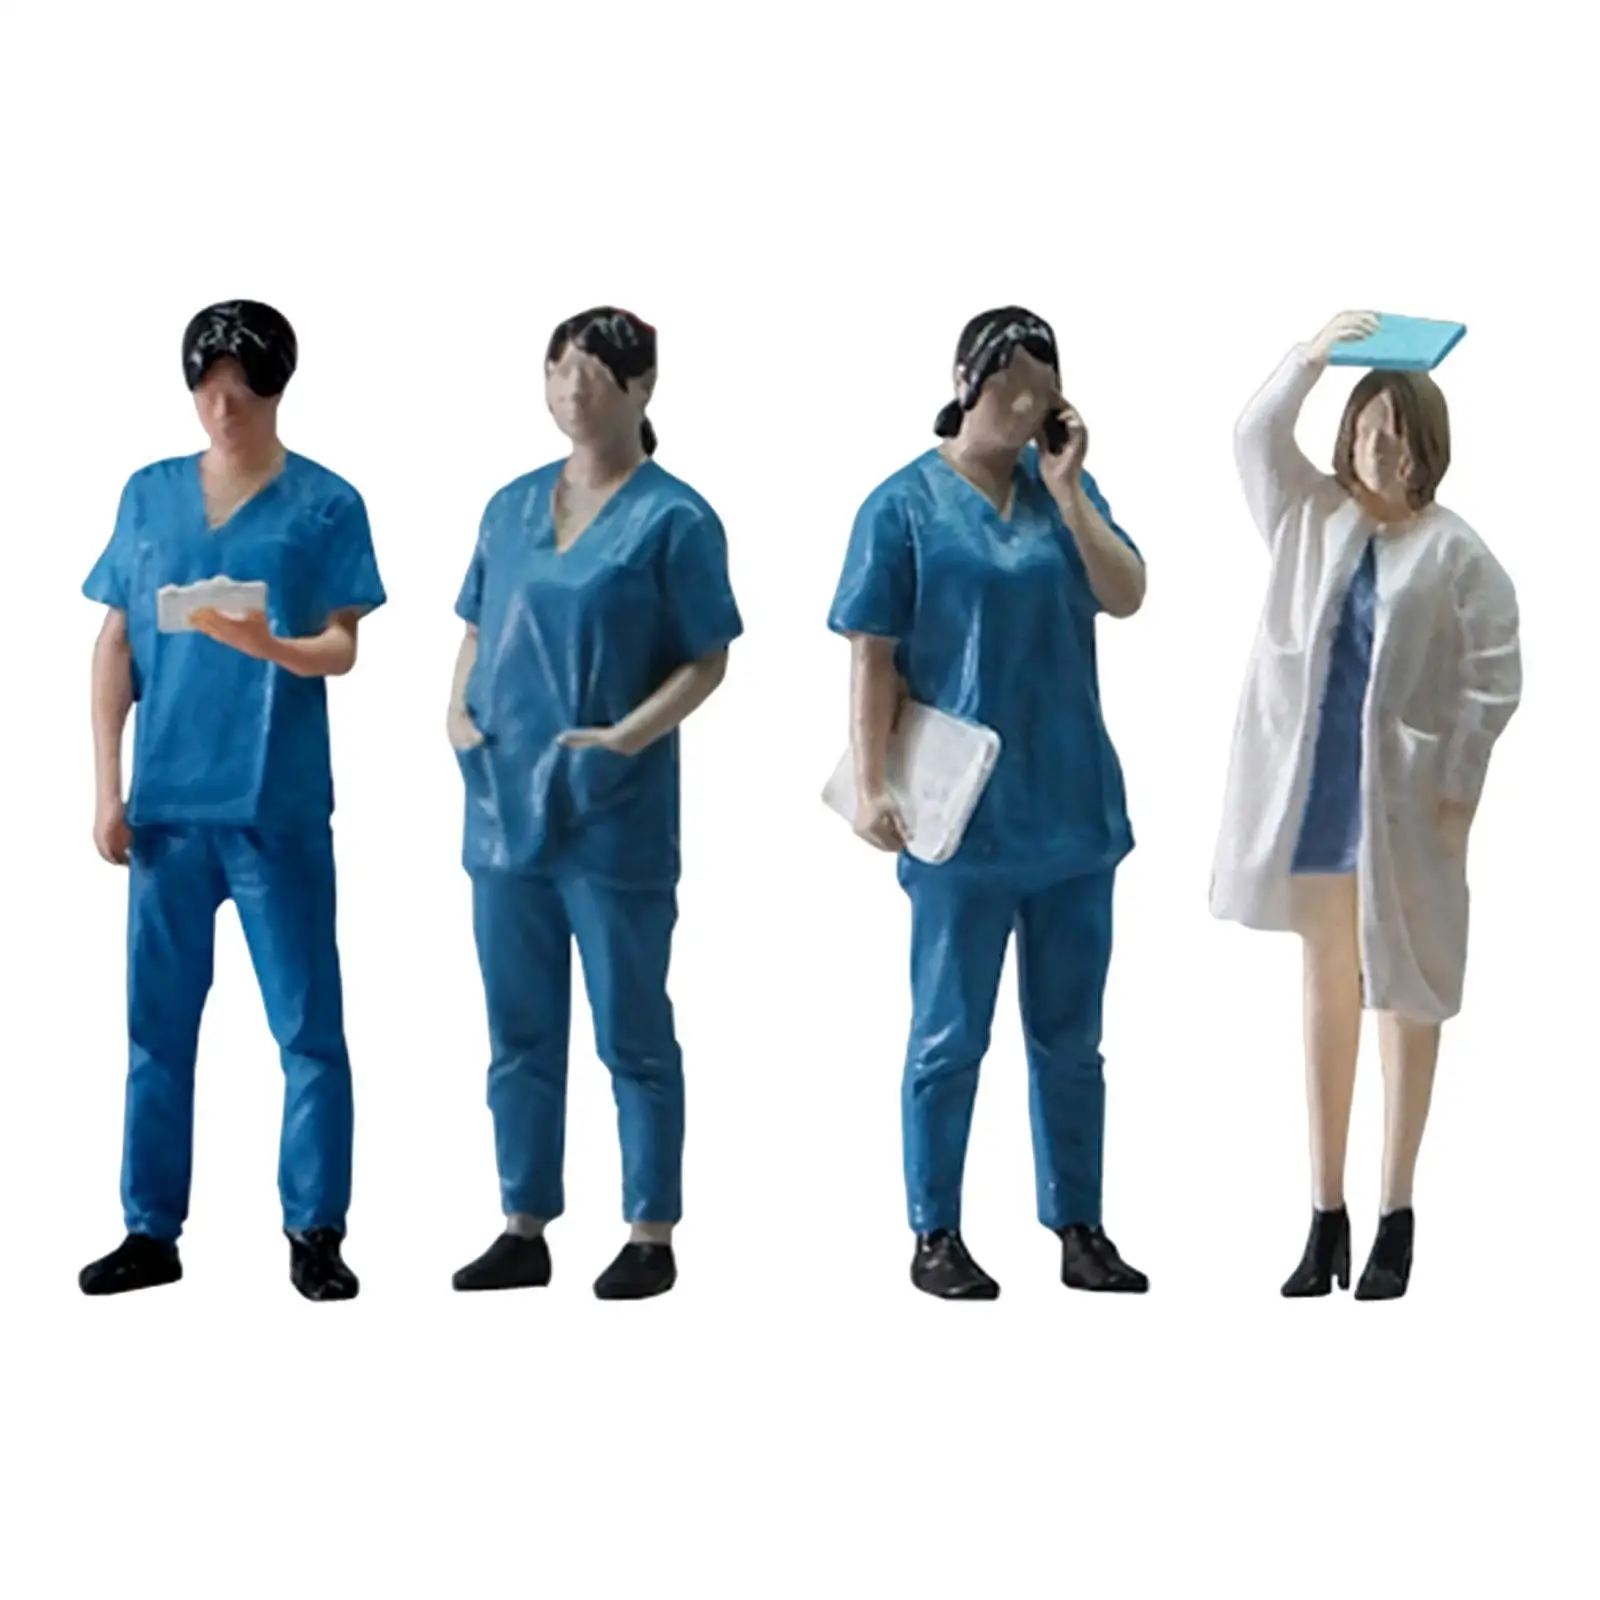 1/32 Scale Models Figurine Ornament Simulation Figurines 1:32 Doctor Figurine for Diorama Layout DIY Scene Dollhouse Decor